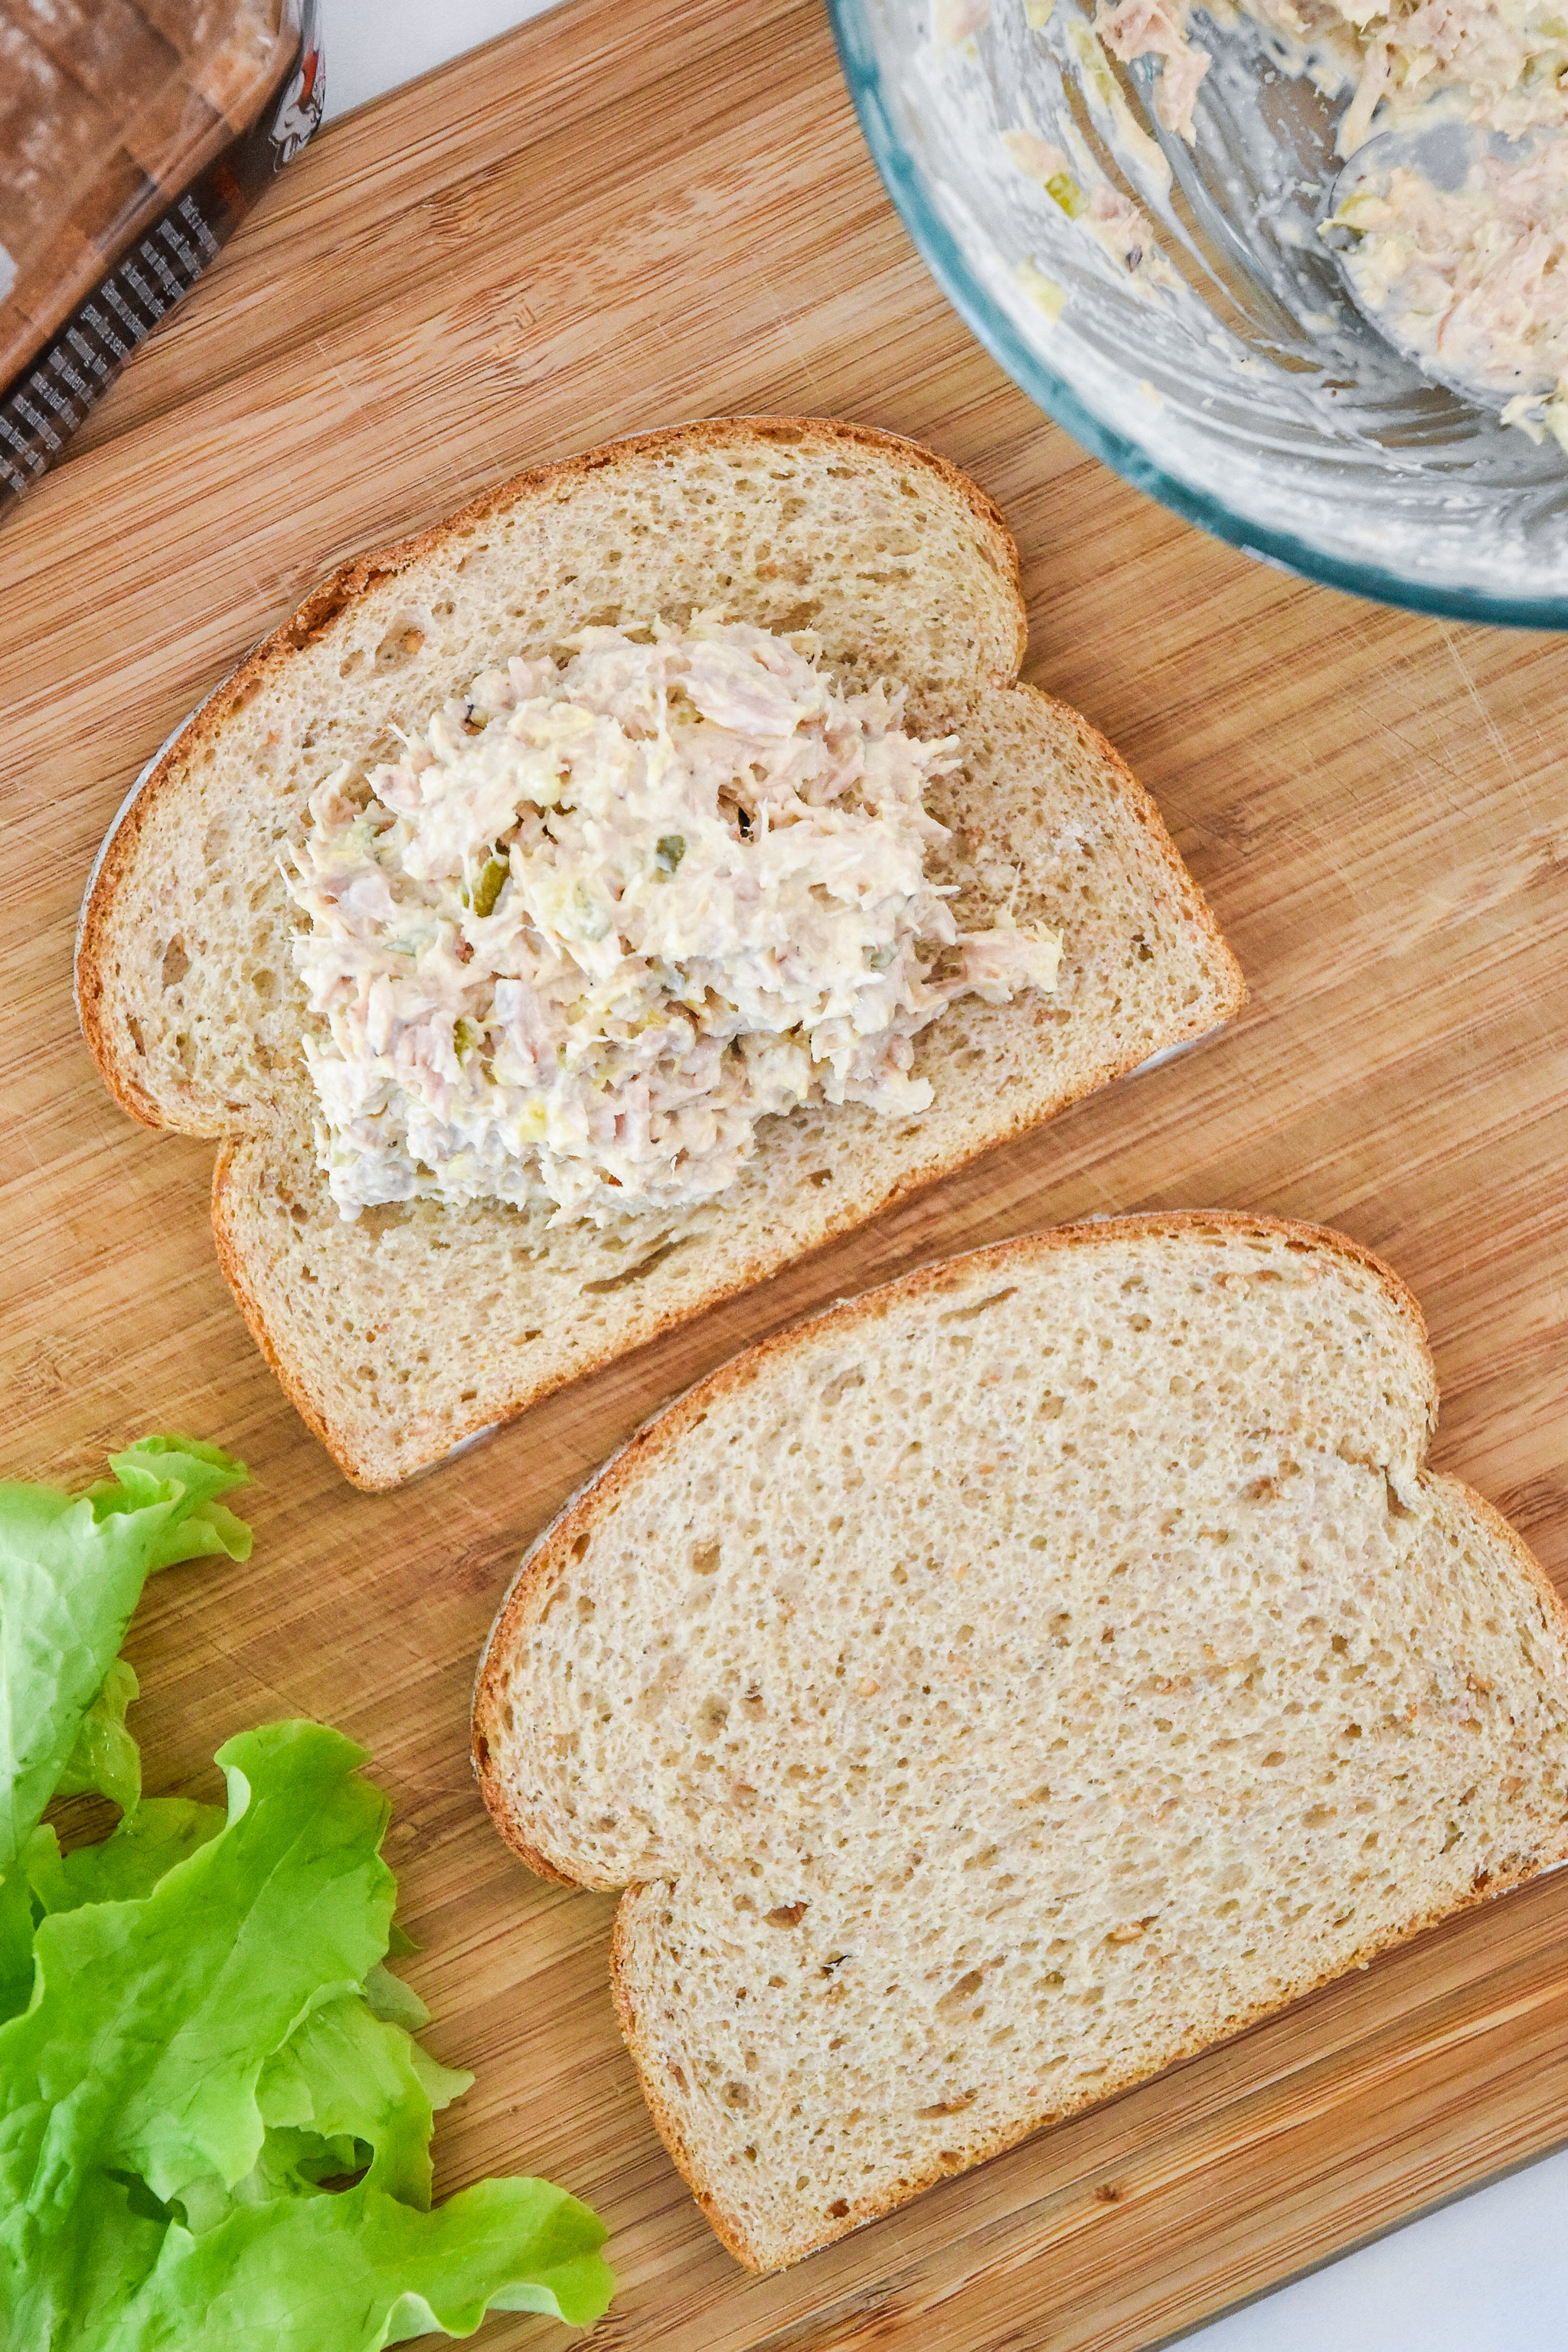 assembling a tuna sandwich with the no chop tuna salad.